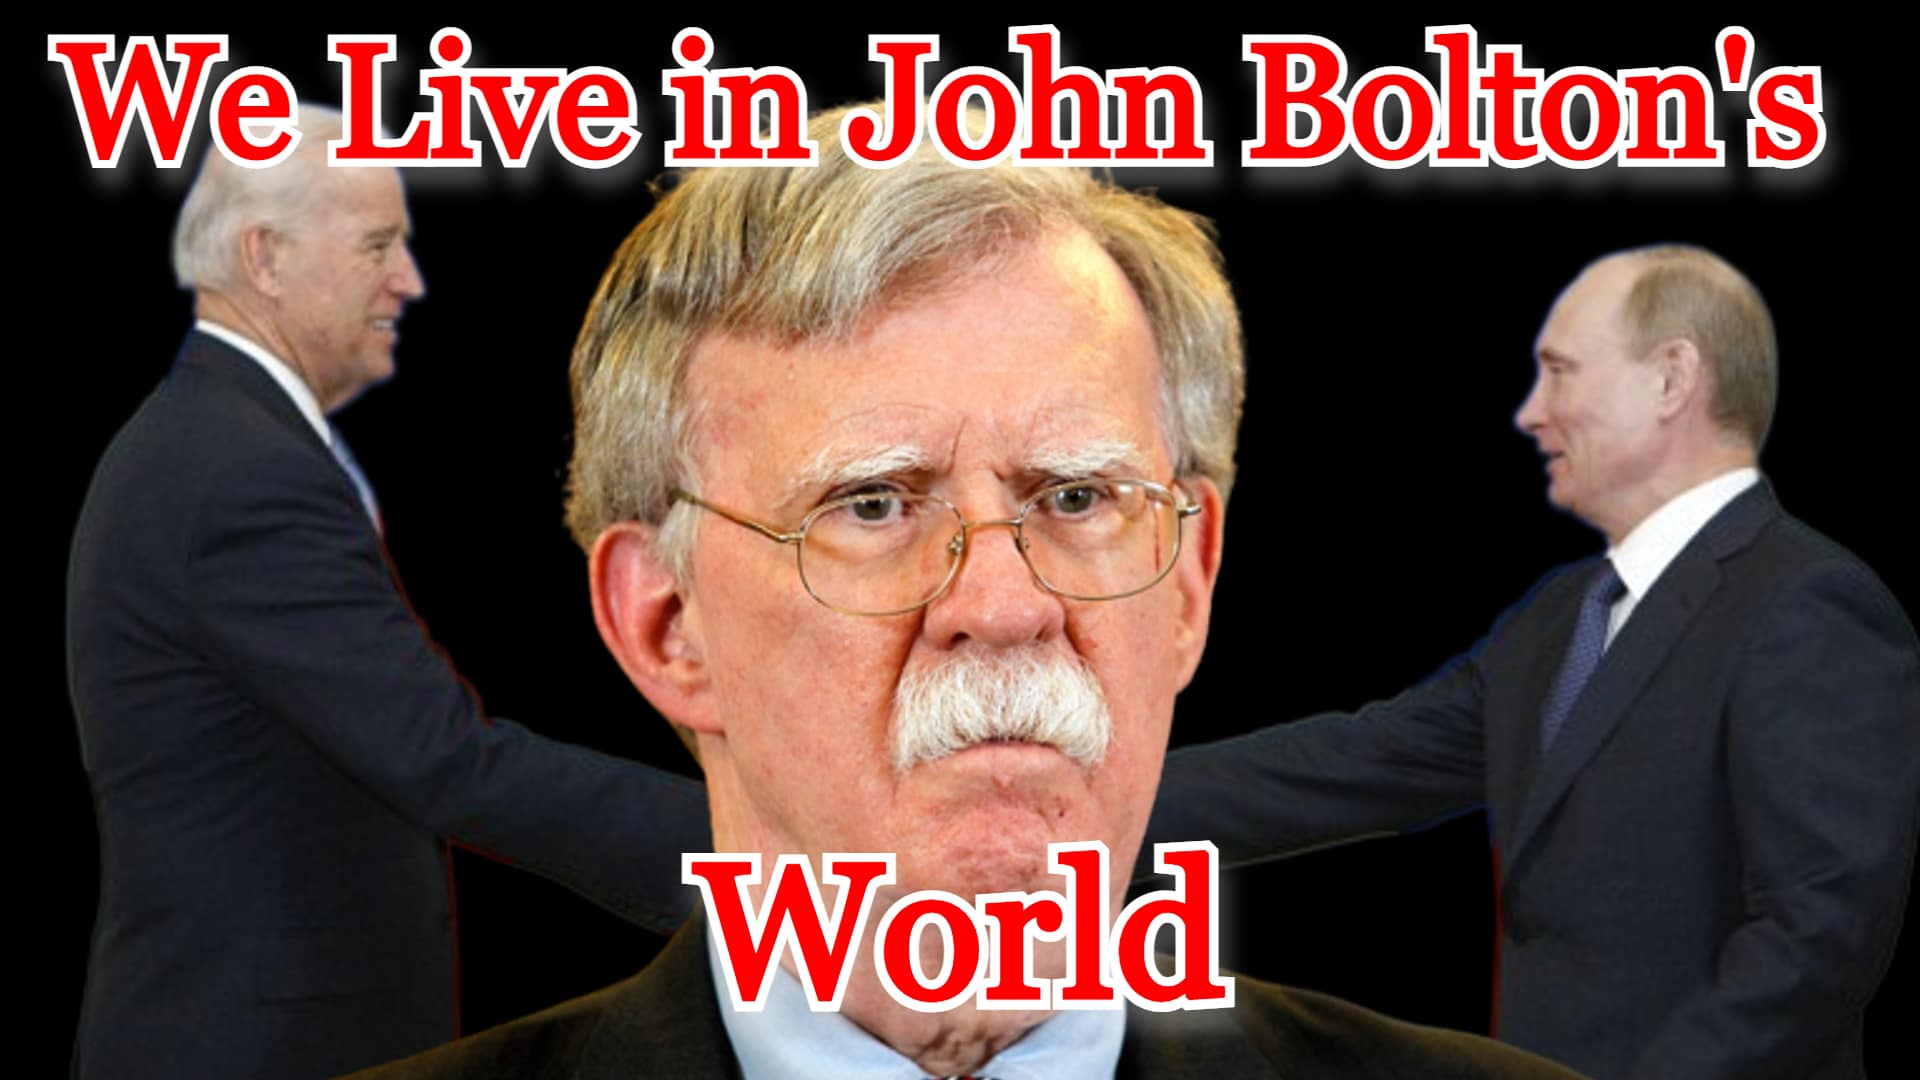 COI #387: We Live in John Bolton’s World